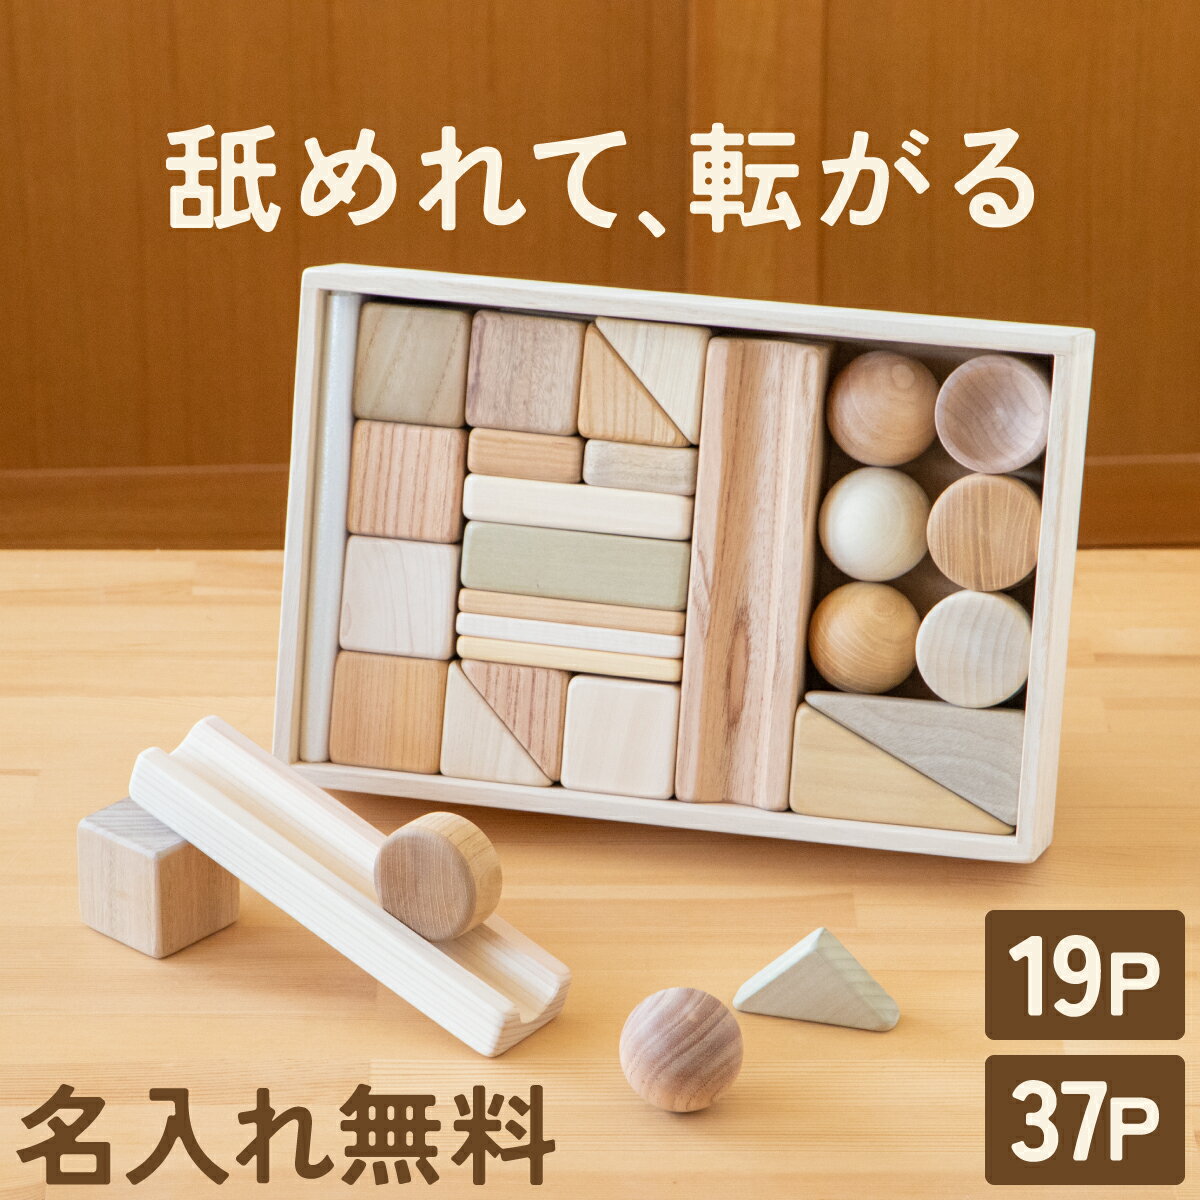 Artec(アーテック) 木製つみきゲーム(箱入) #2583